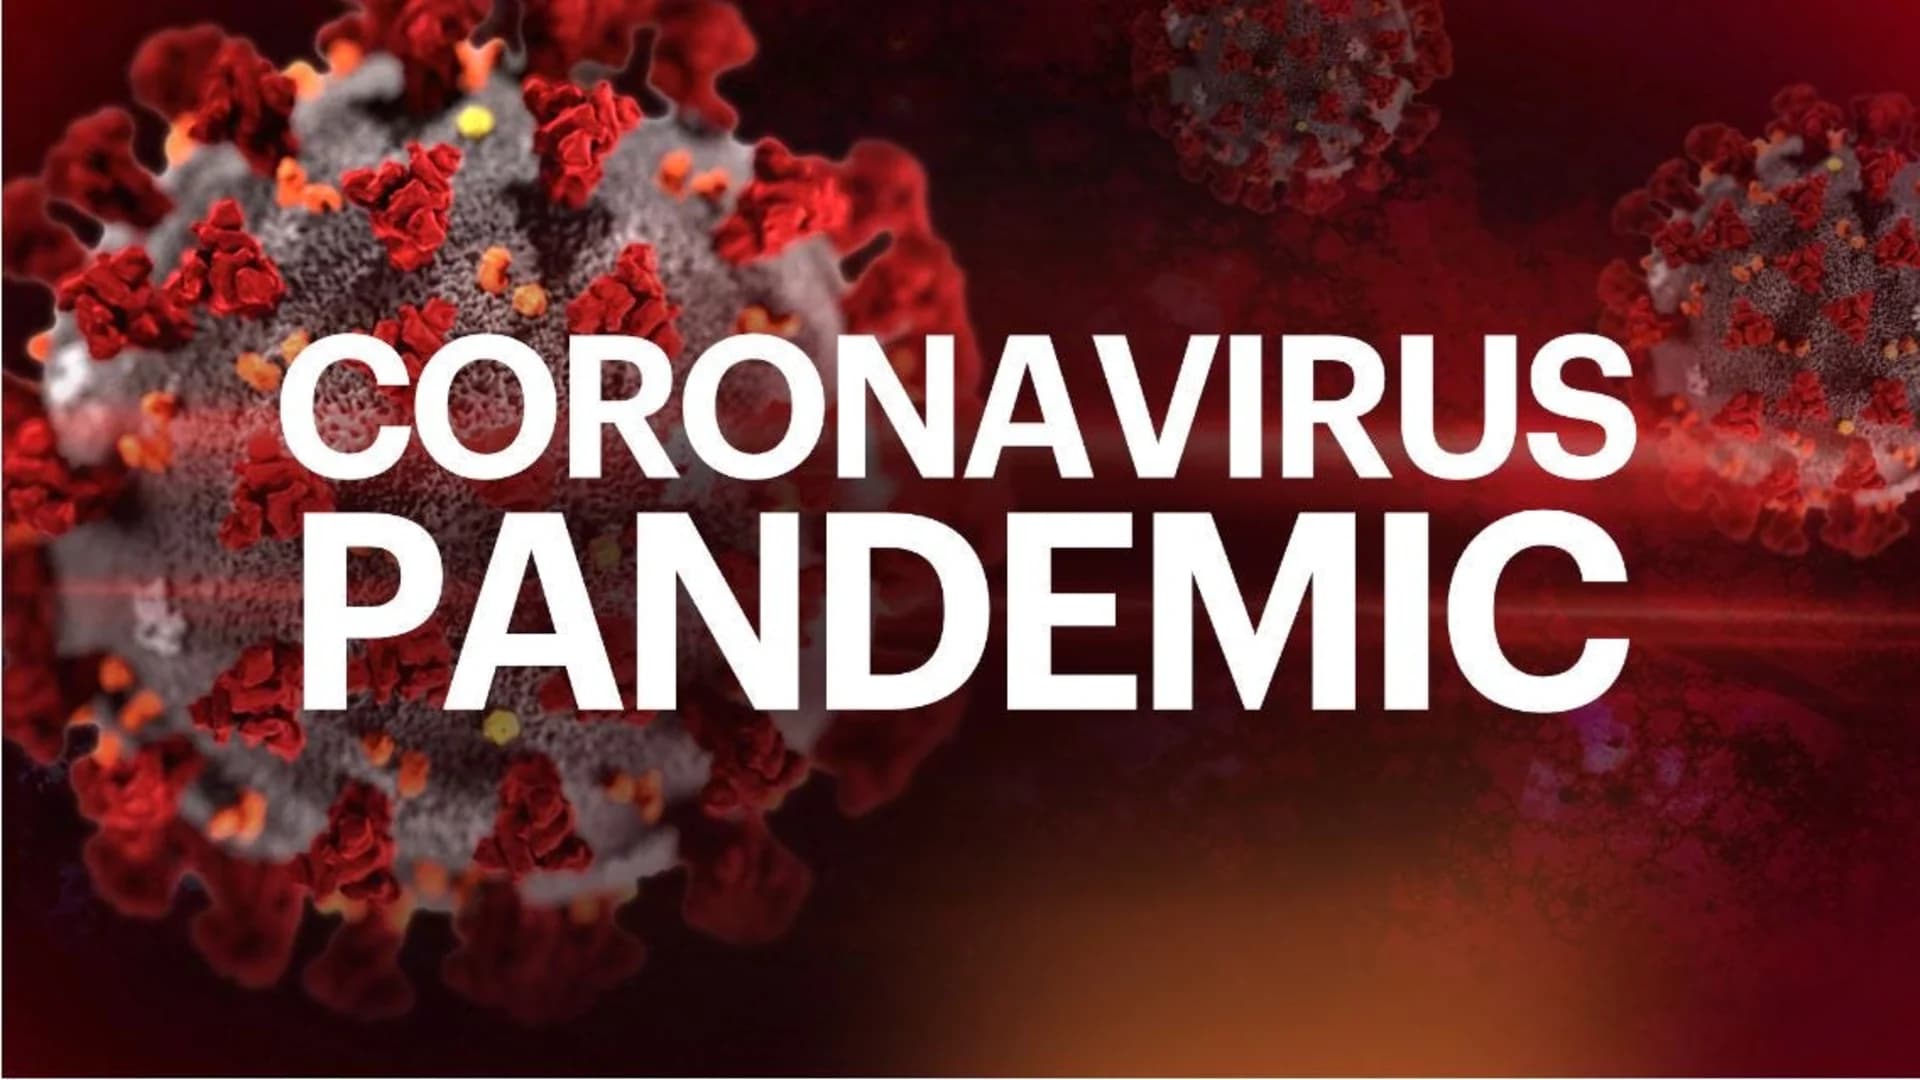 WATCH LIVE: Coronavirus pandemic financial Q&A special